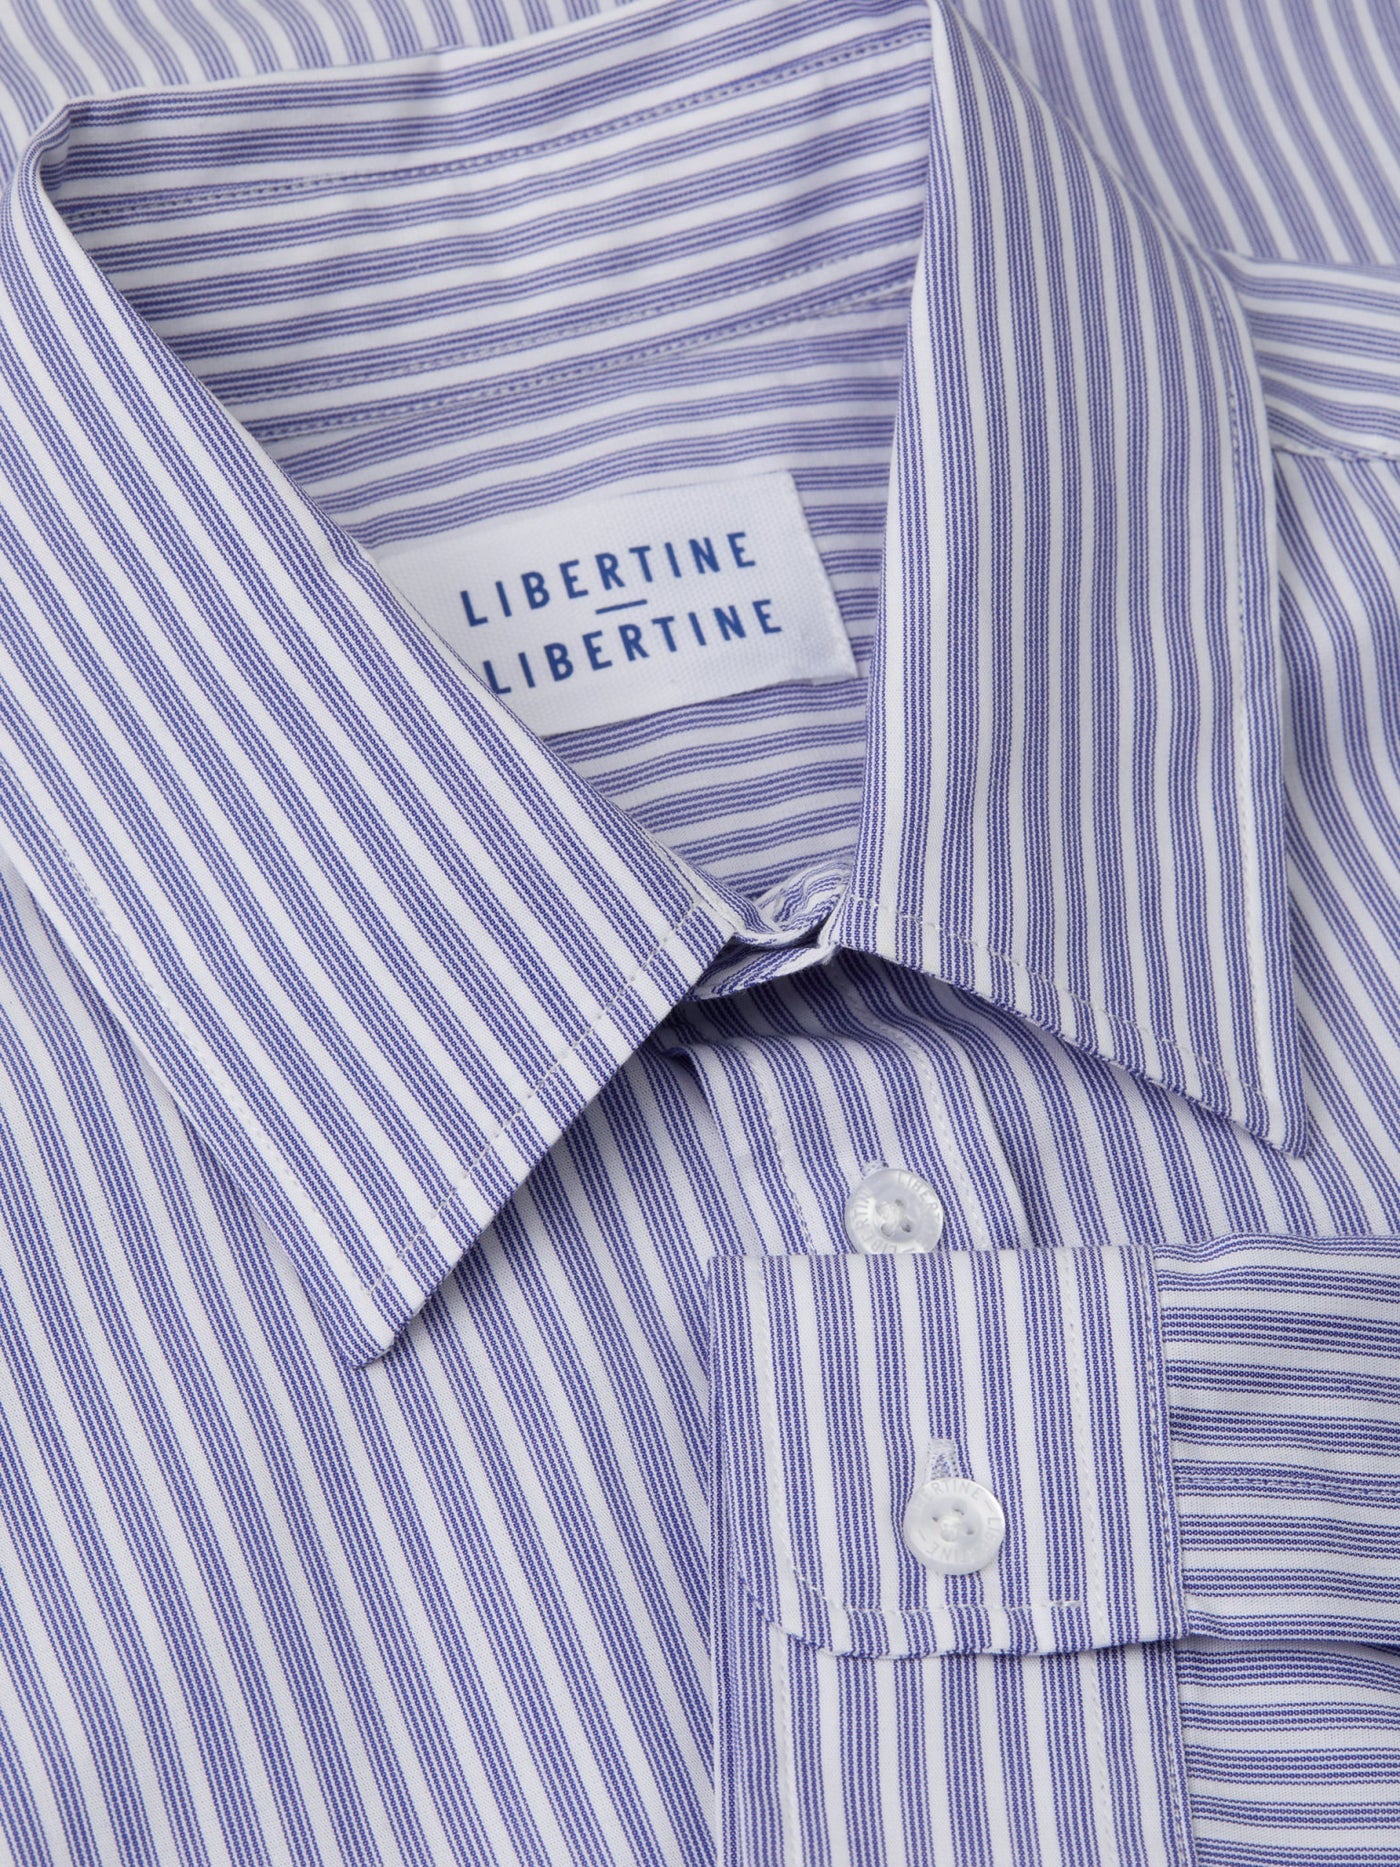 libertine libertine_babylon shirt_blue pin stripe_4_4